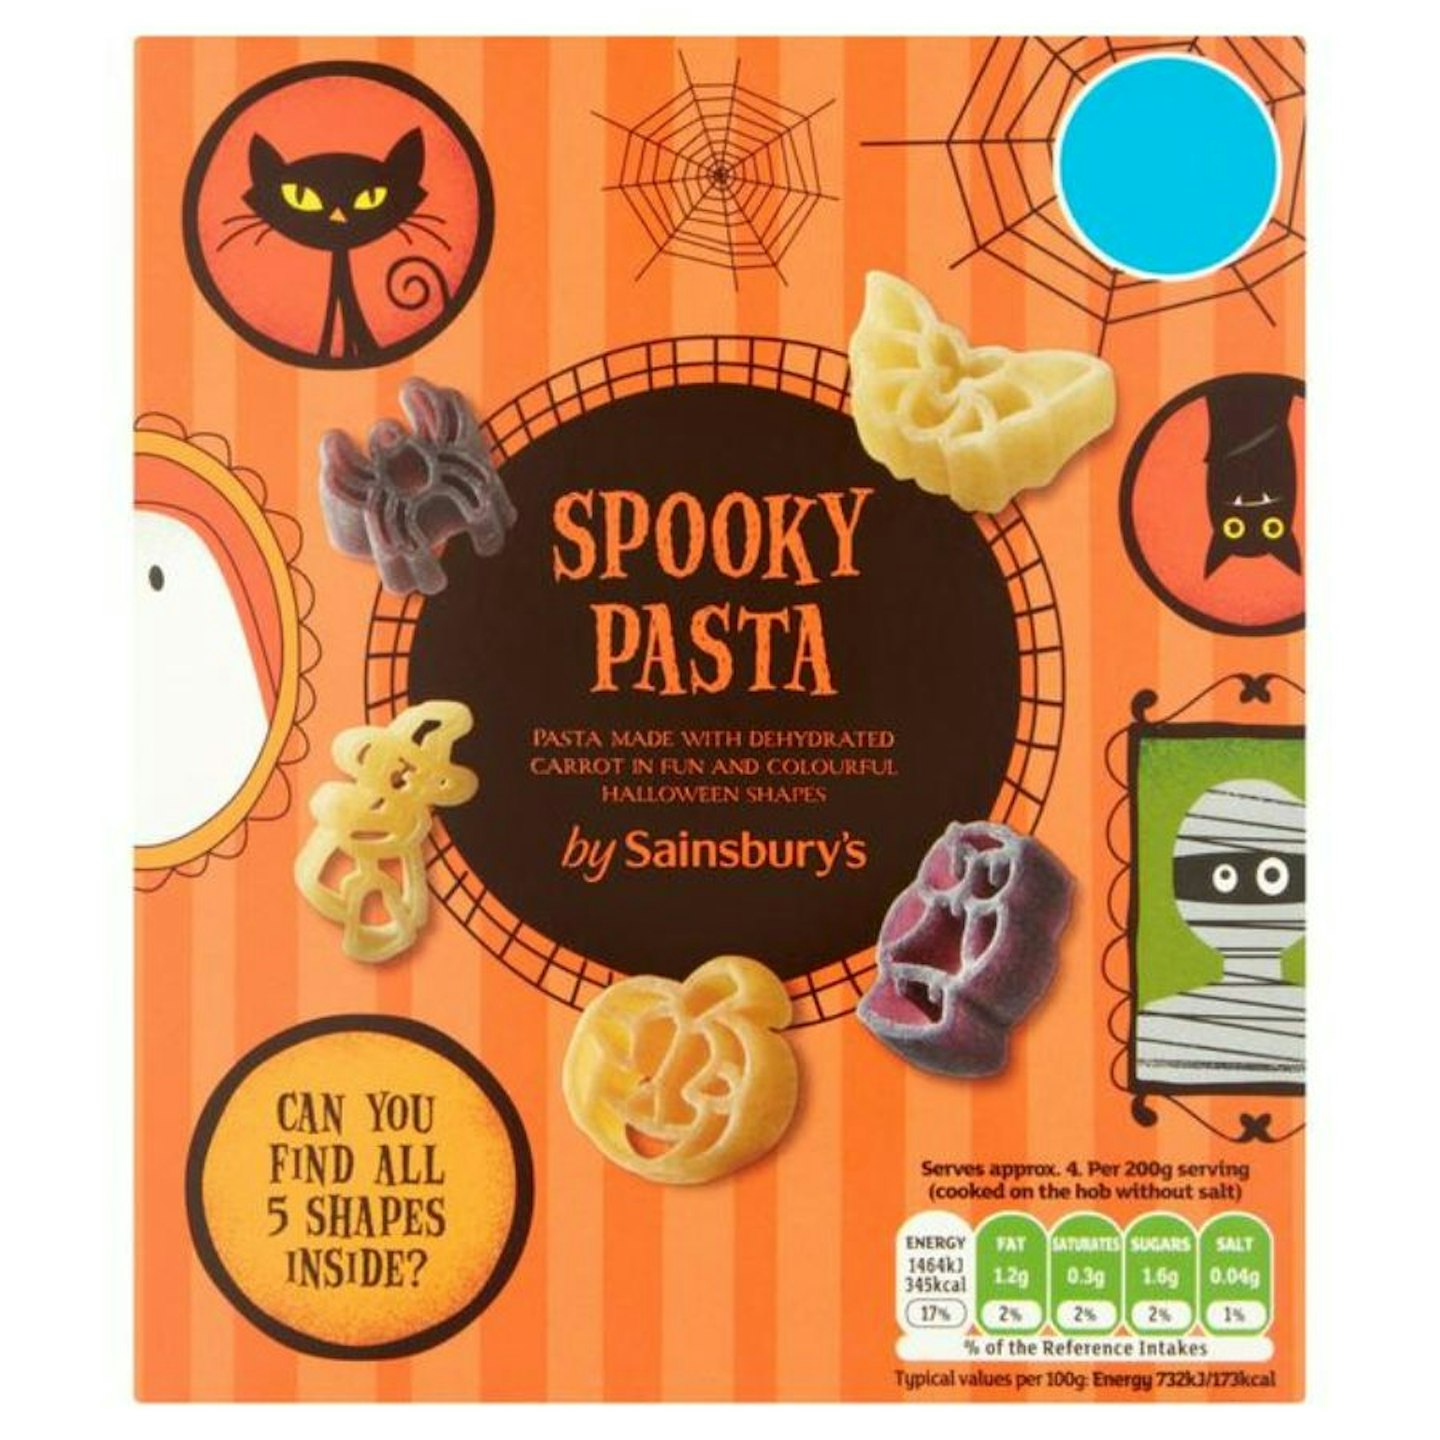 Sainsbury's Spooky Pasta